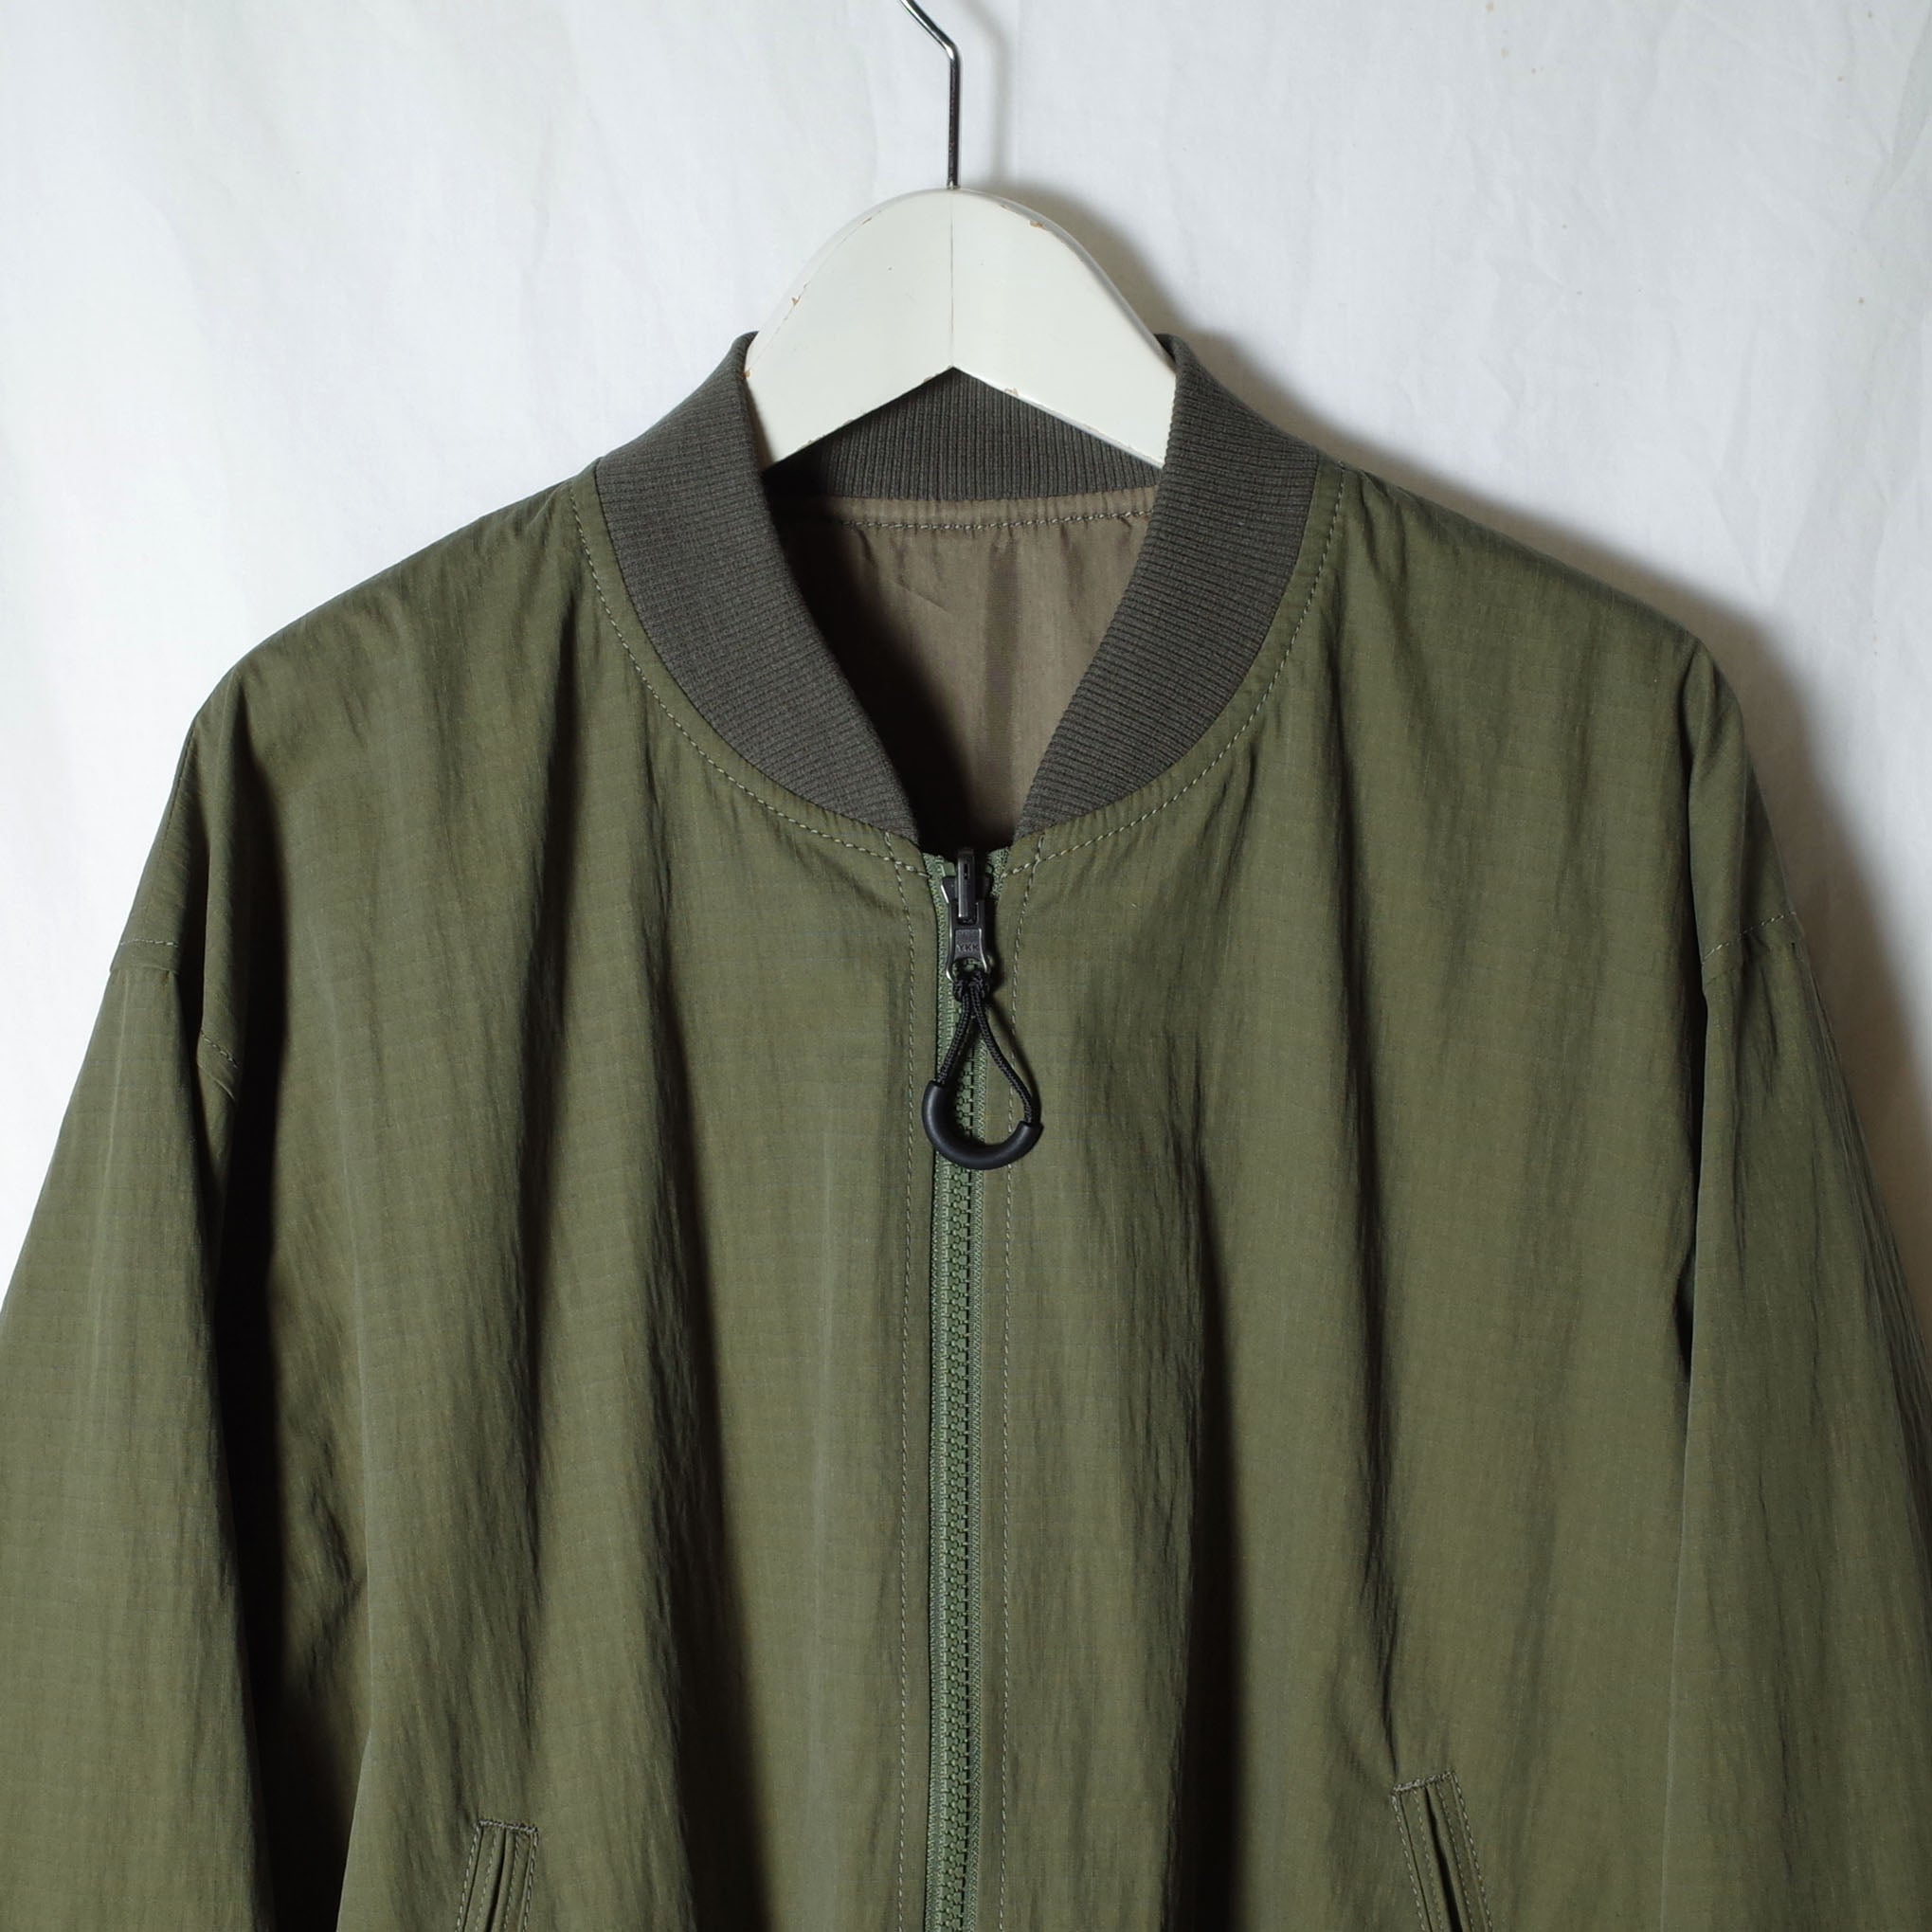 SANDINISTA ”Reversible Spring Jacket